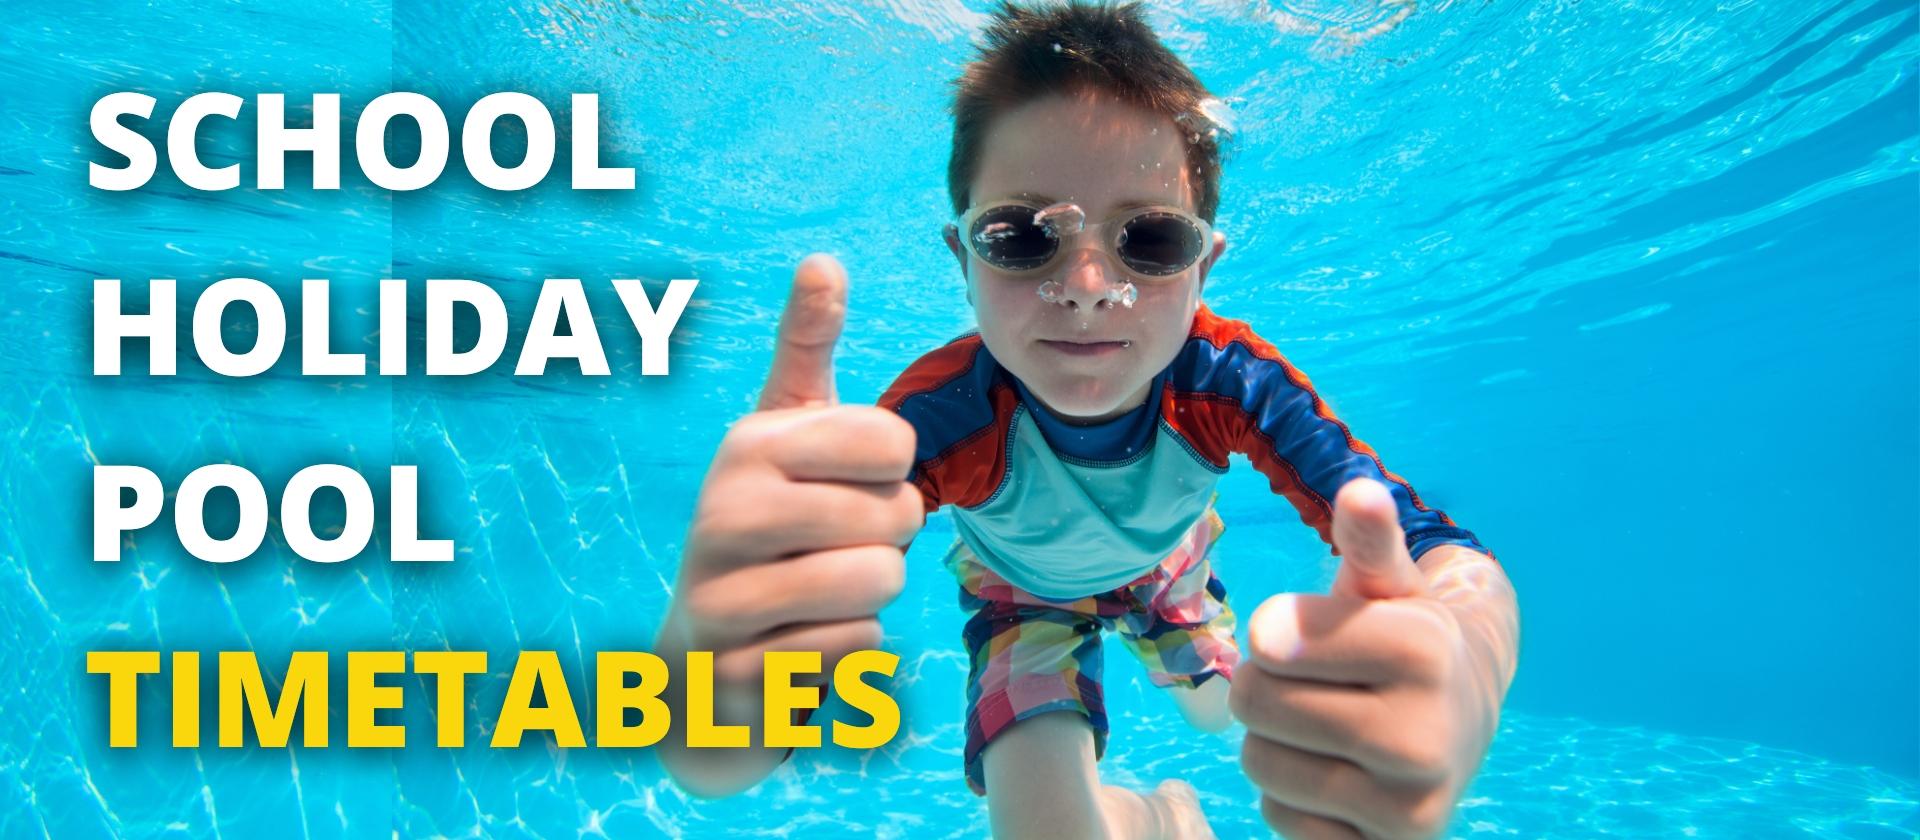 School holiday pool timetable